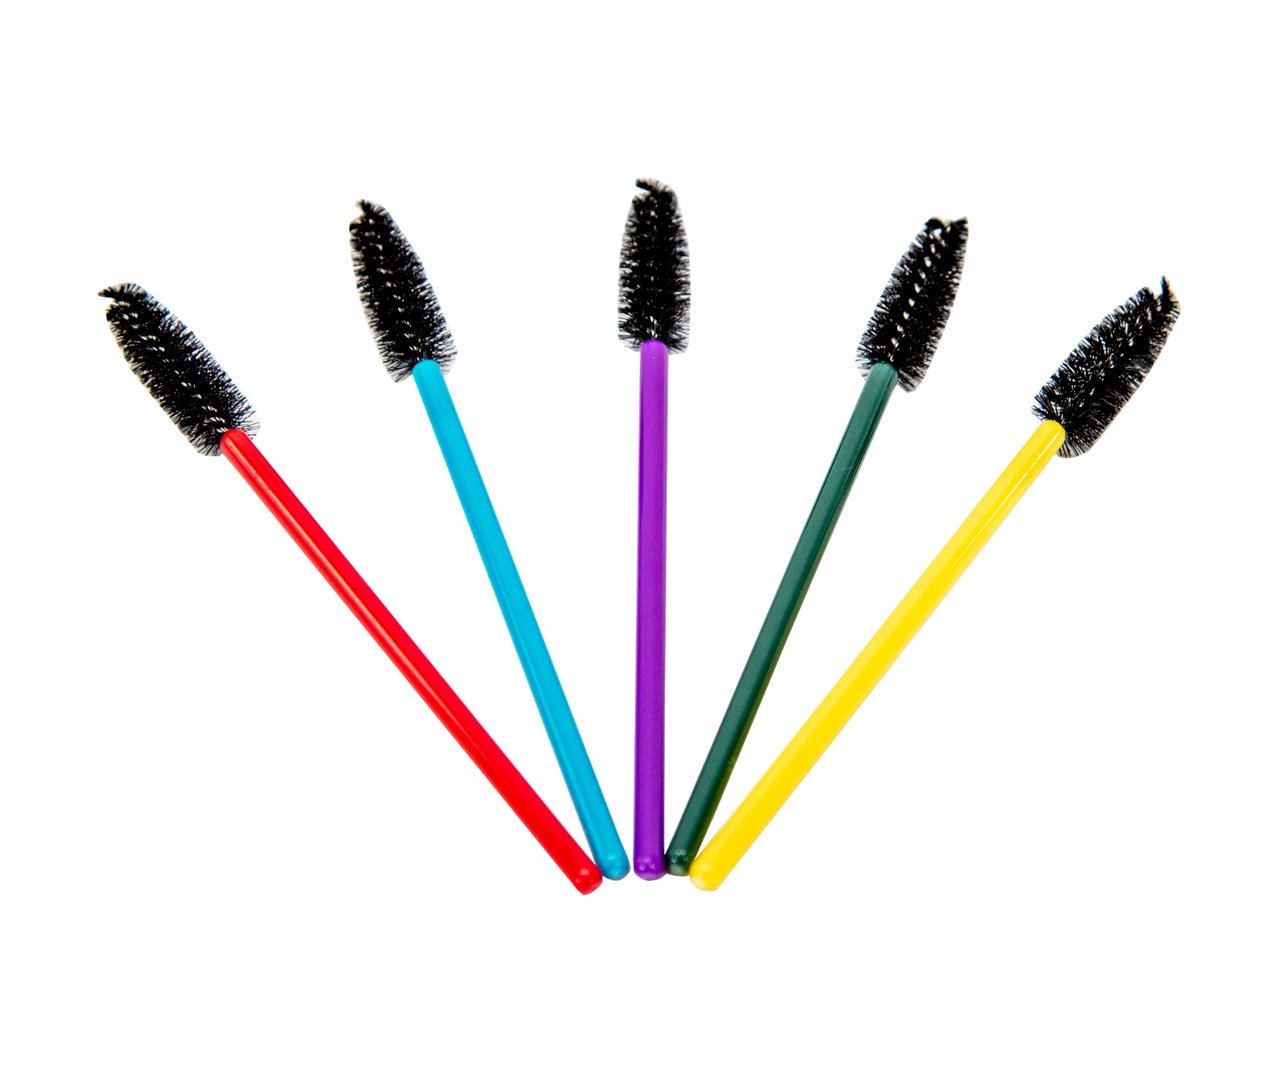 Hummingbird Feeder Port Brushes, Mini Nylon Cleaning Brushes Set, 5 Small Cleaning Brushes in Each Pack